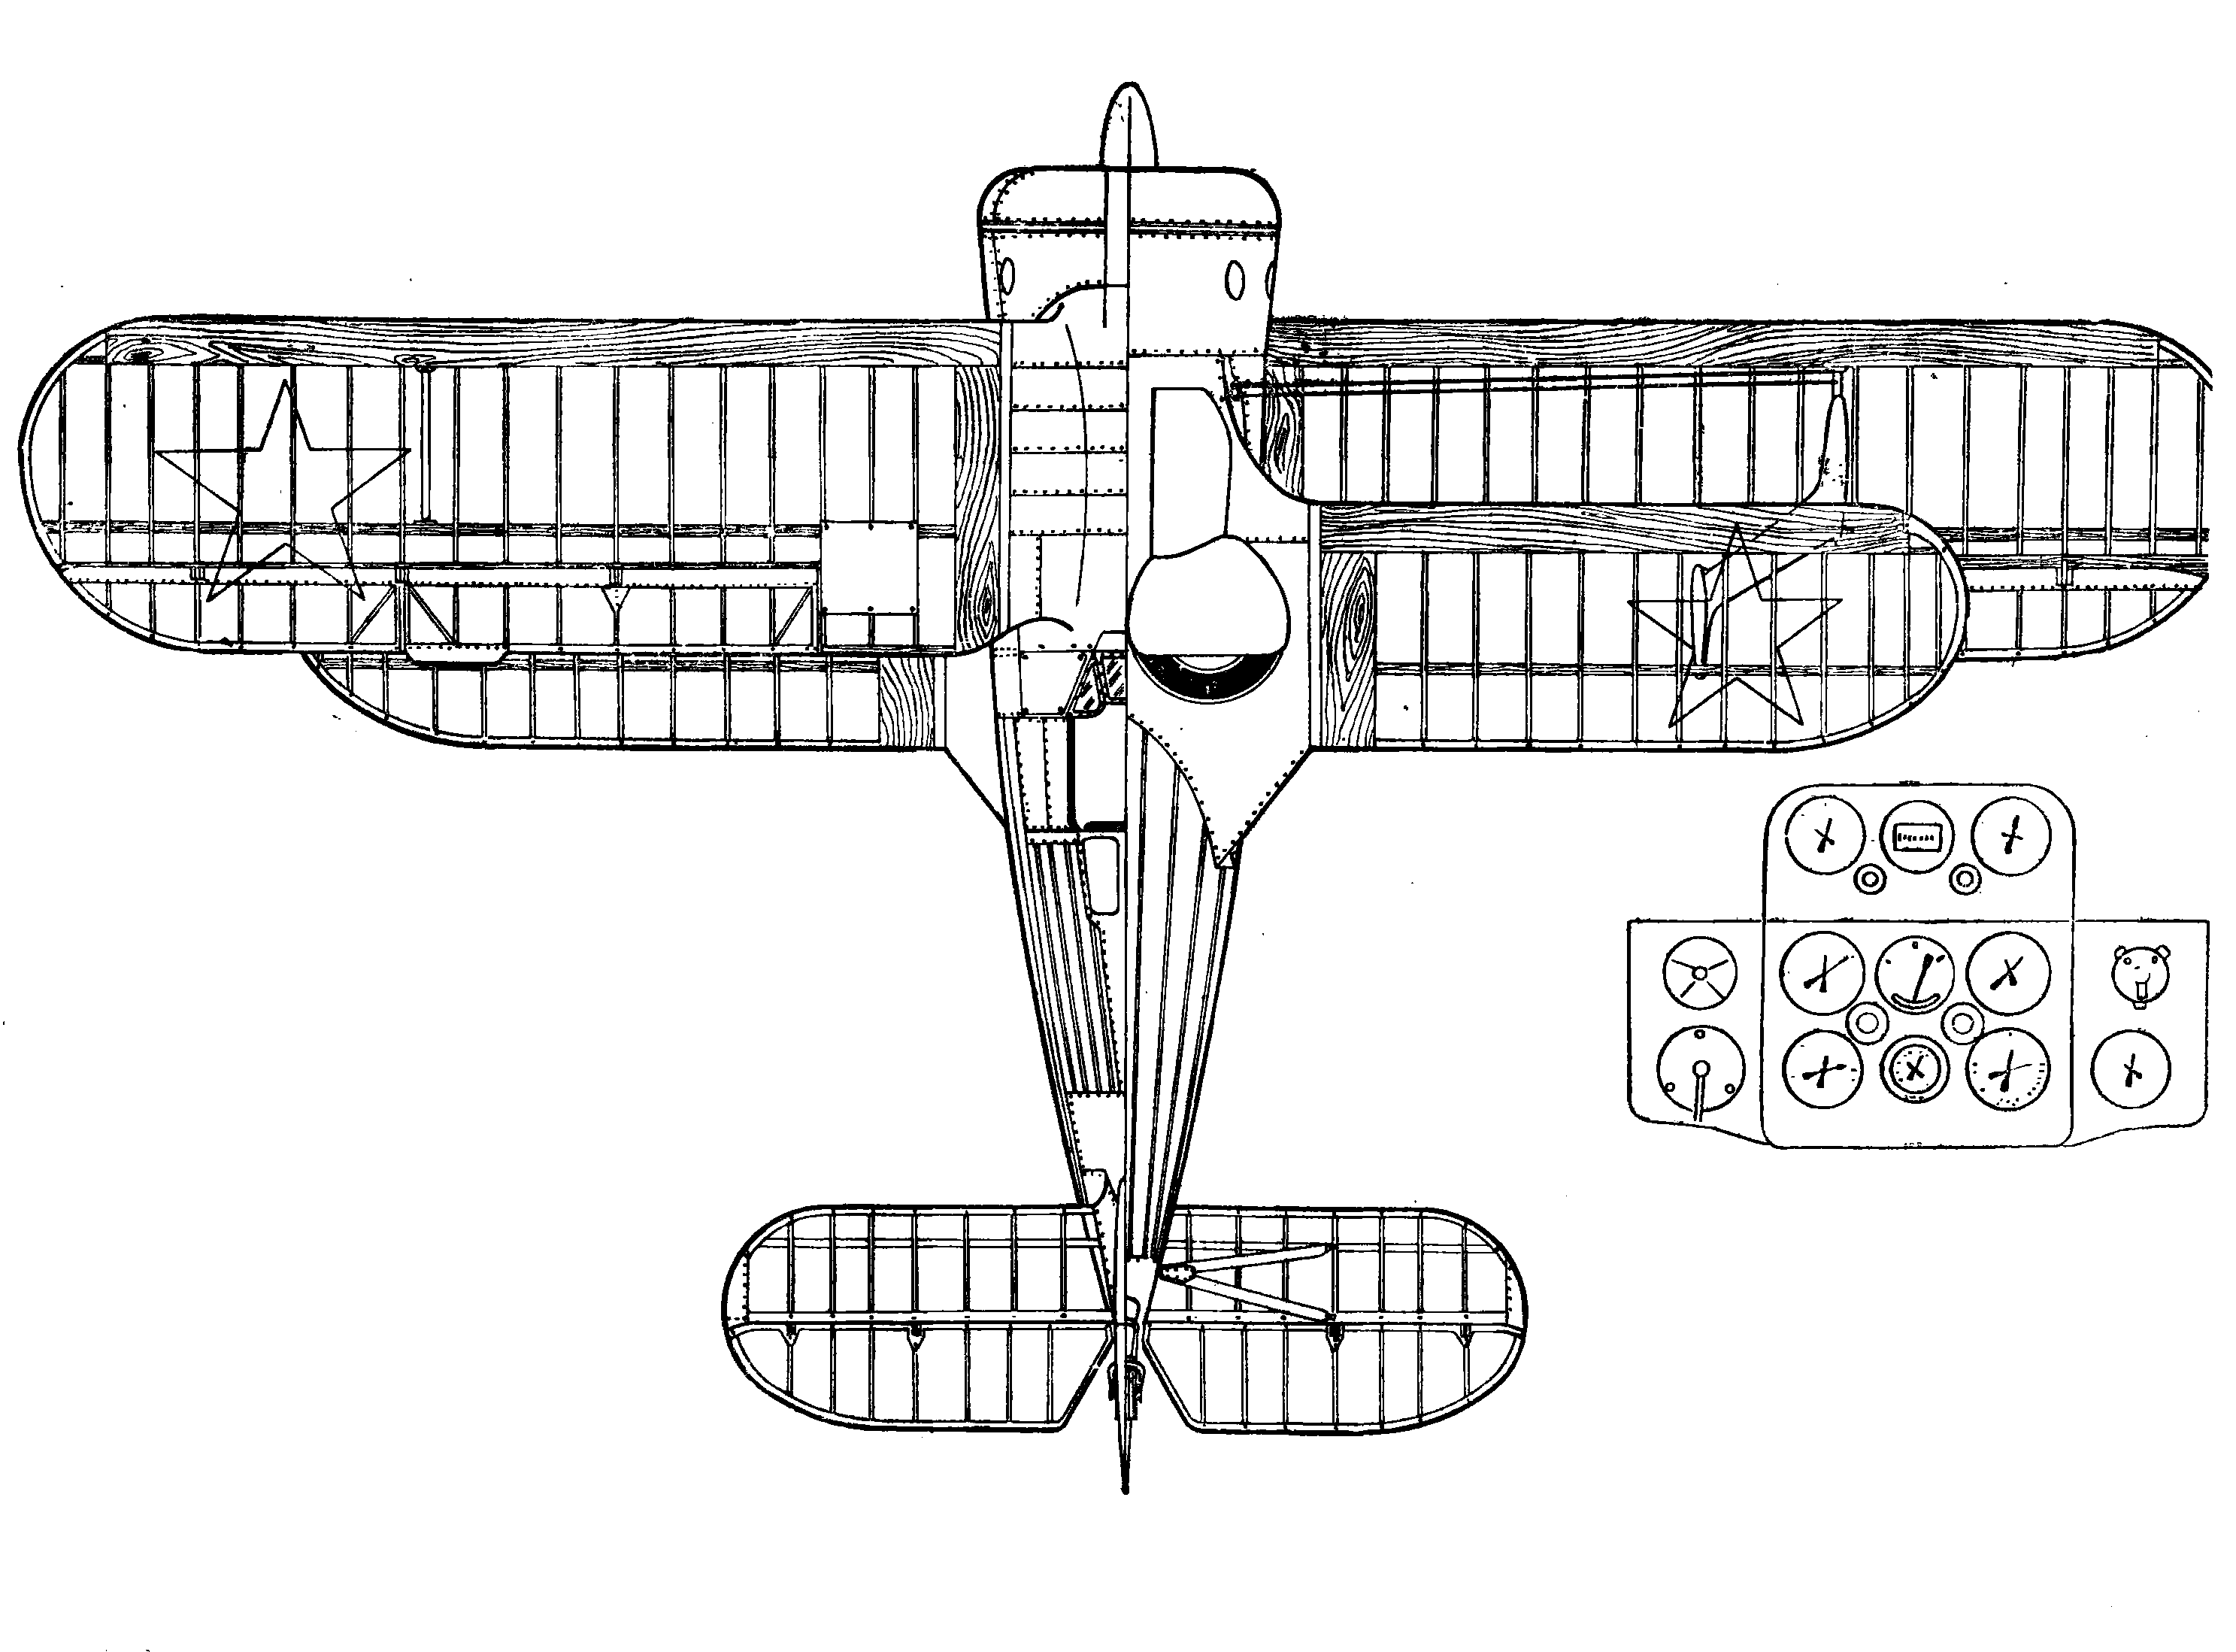 Polikarpov I-153 blueprint